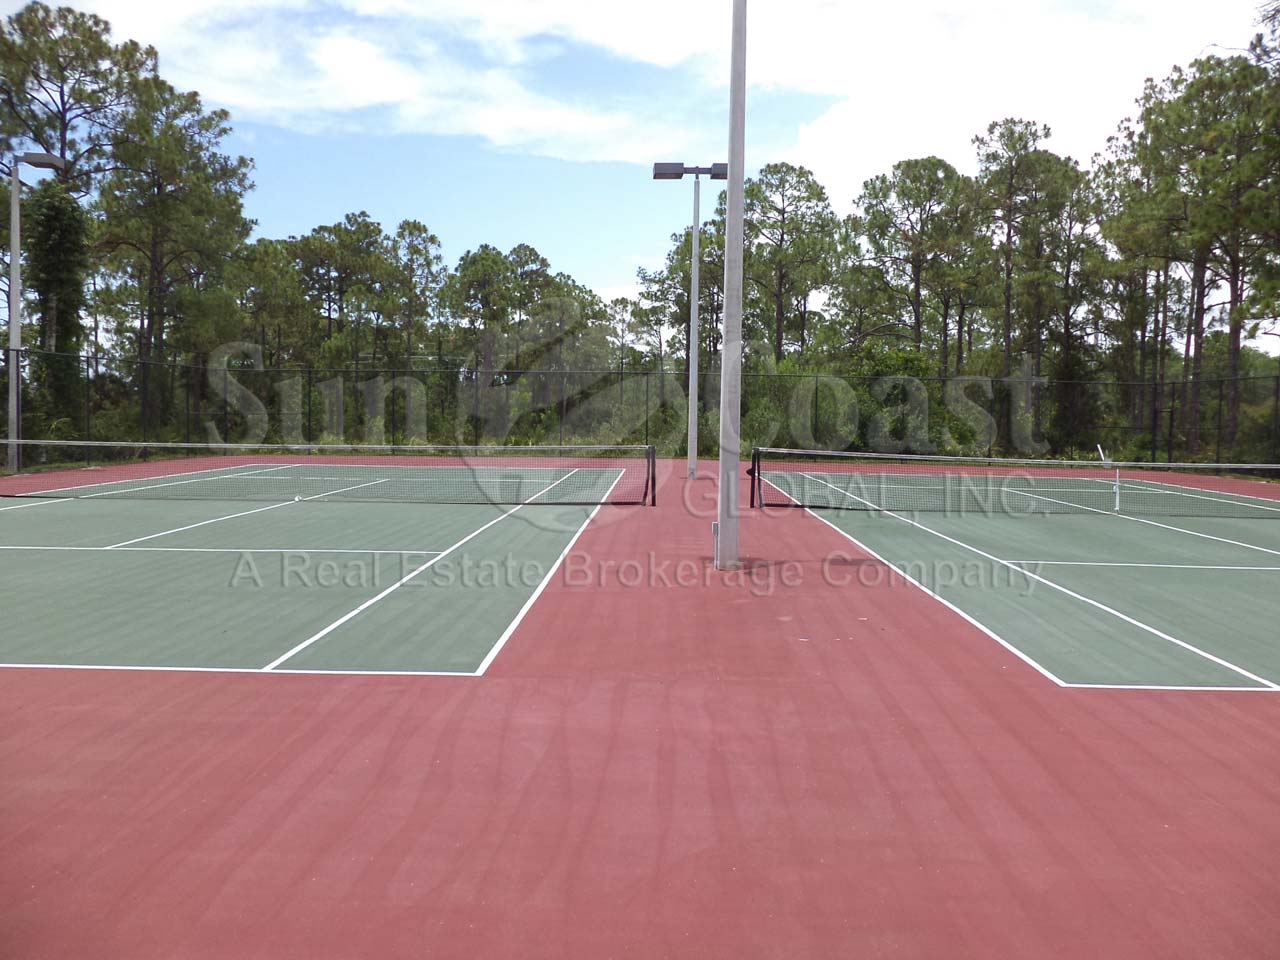 Lemuria tennis courts